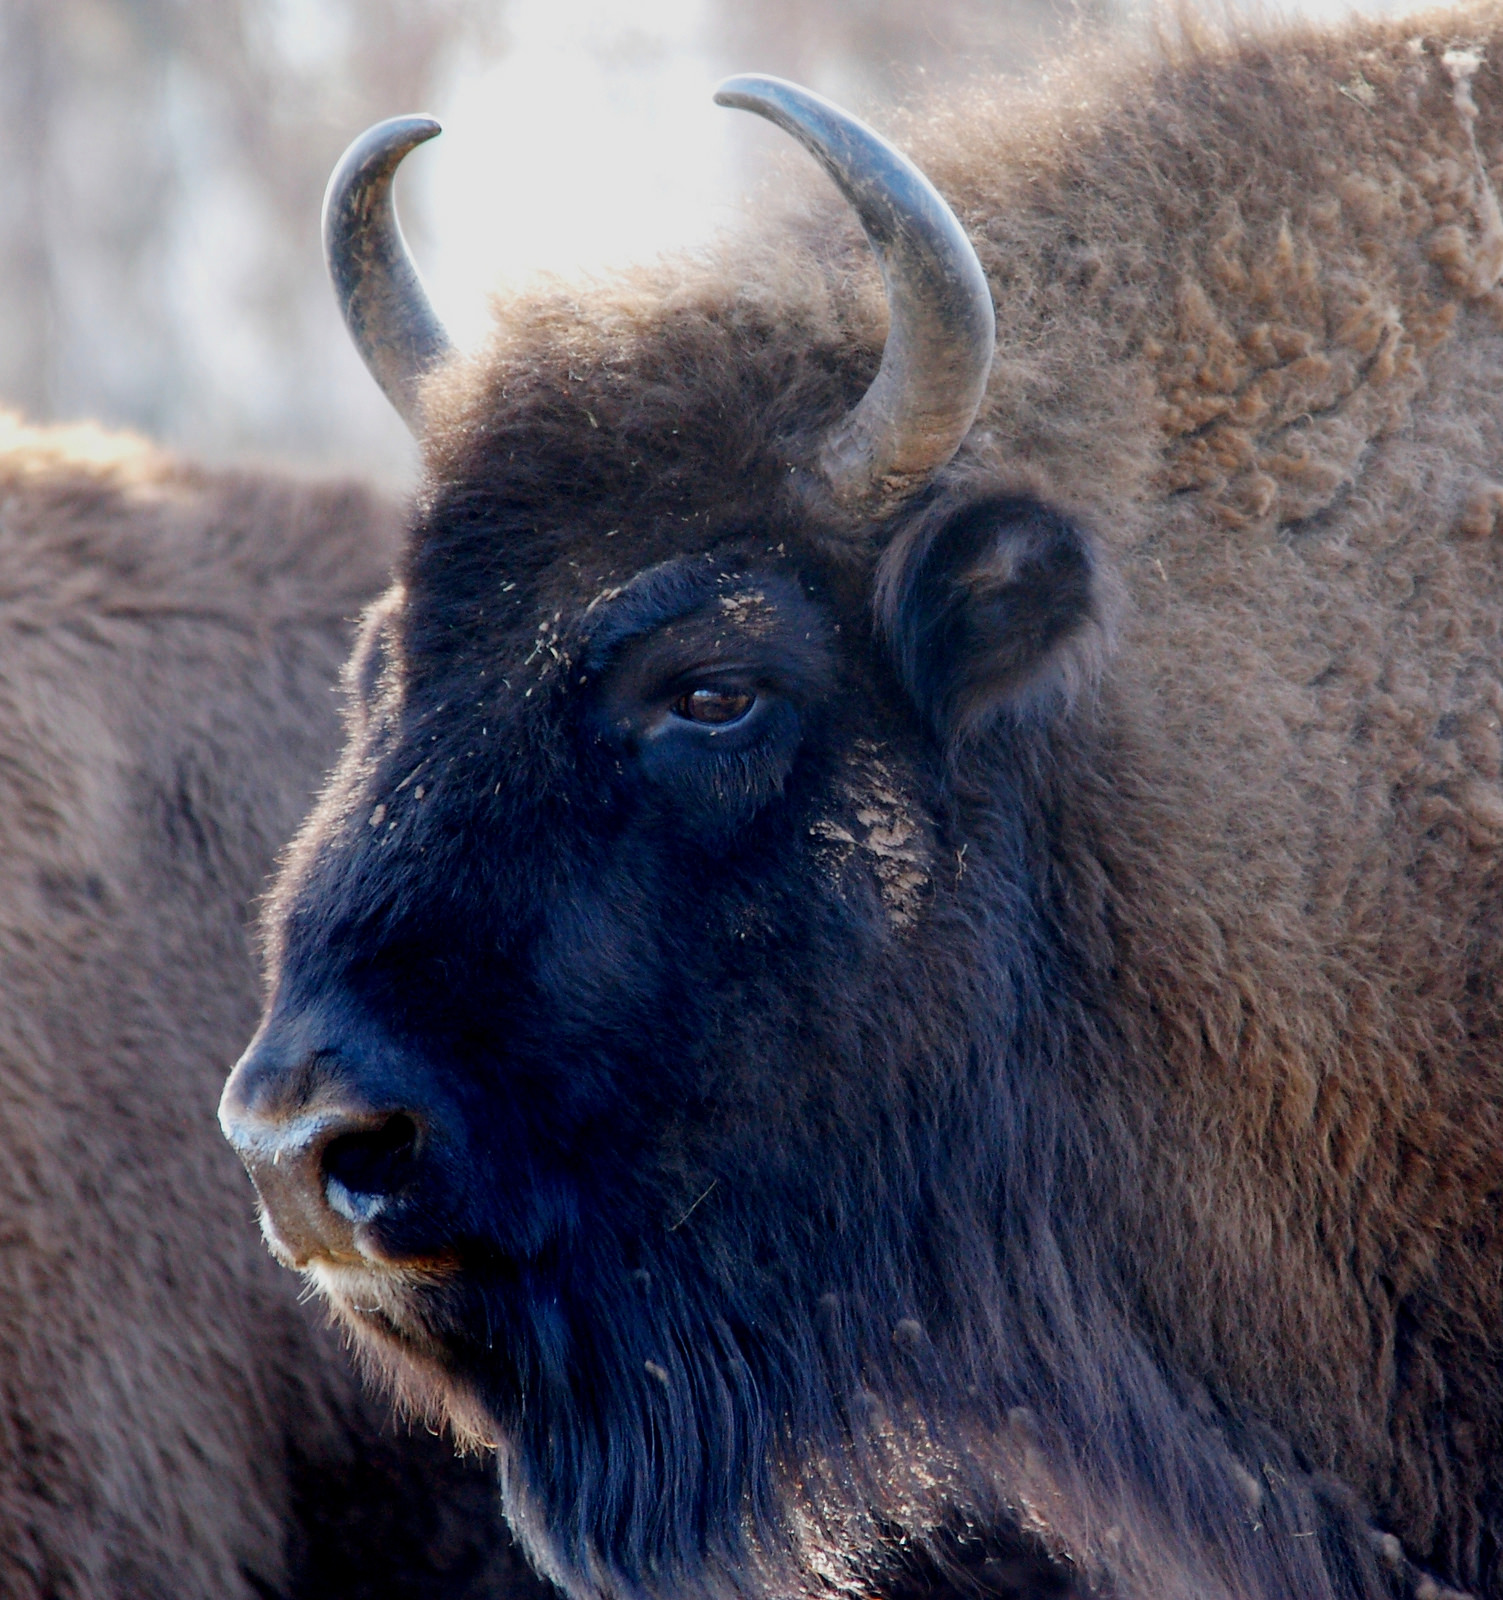 European bison Bison bonasus (wisent) at Highland Wildlife Park, Kingcraig. Photo credit: Nick Jonsson / Flickr